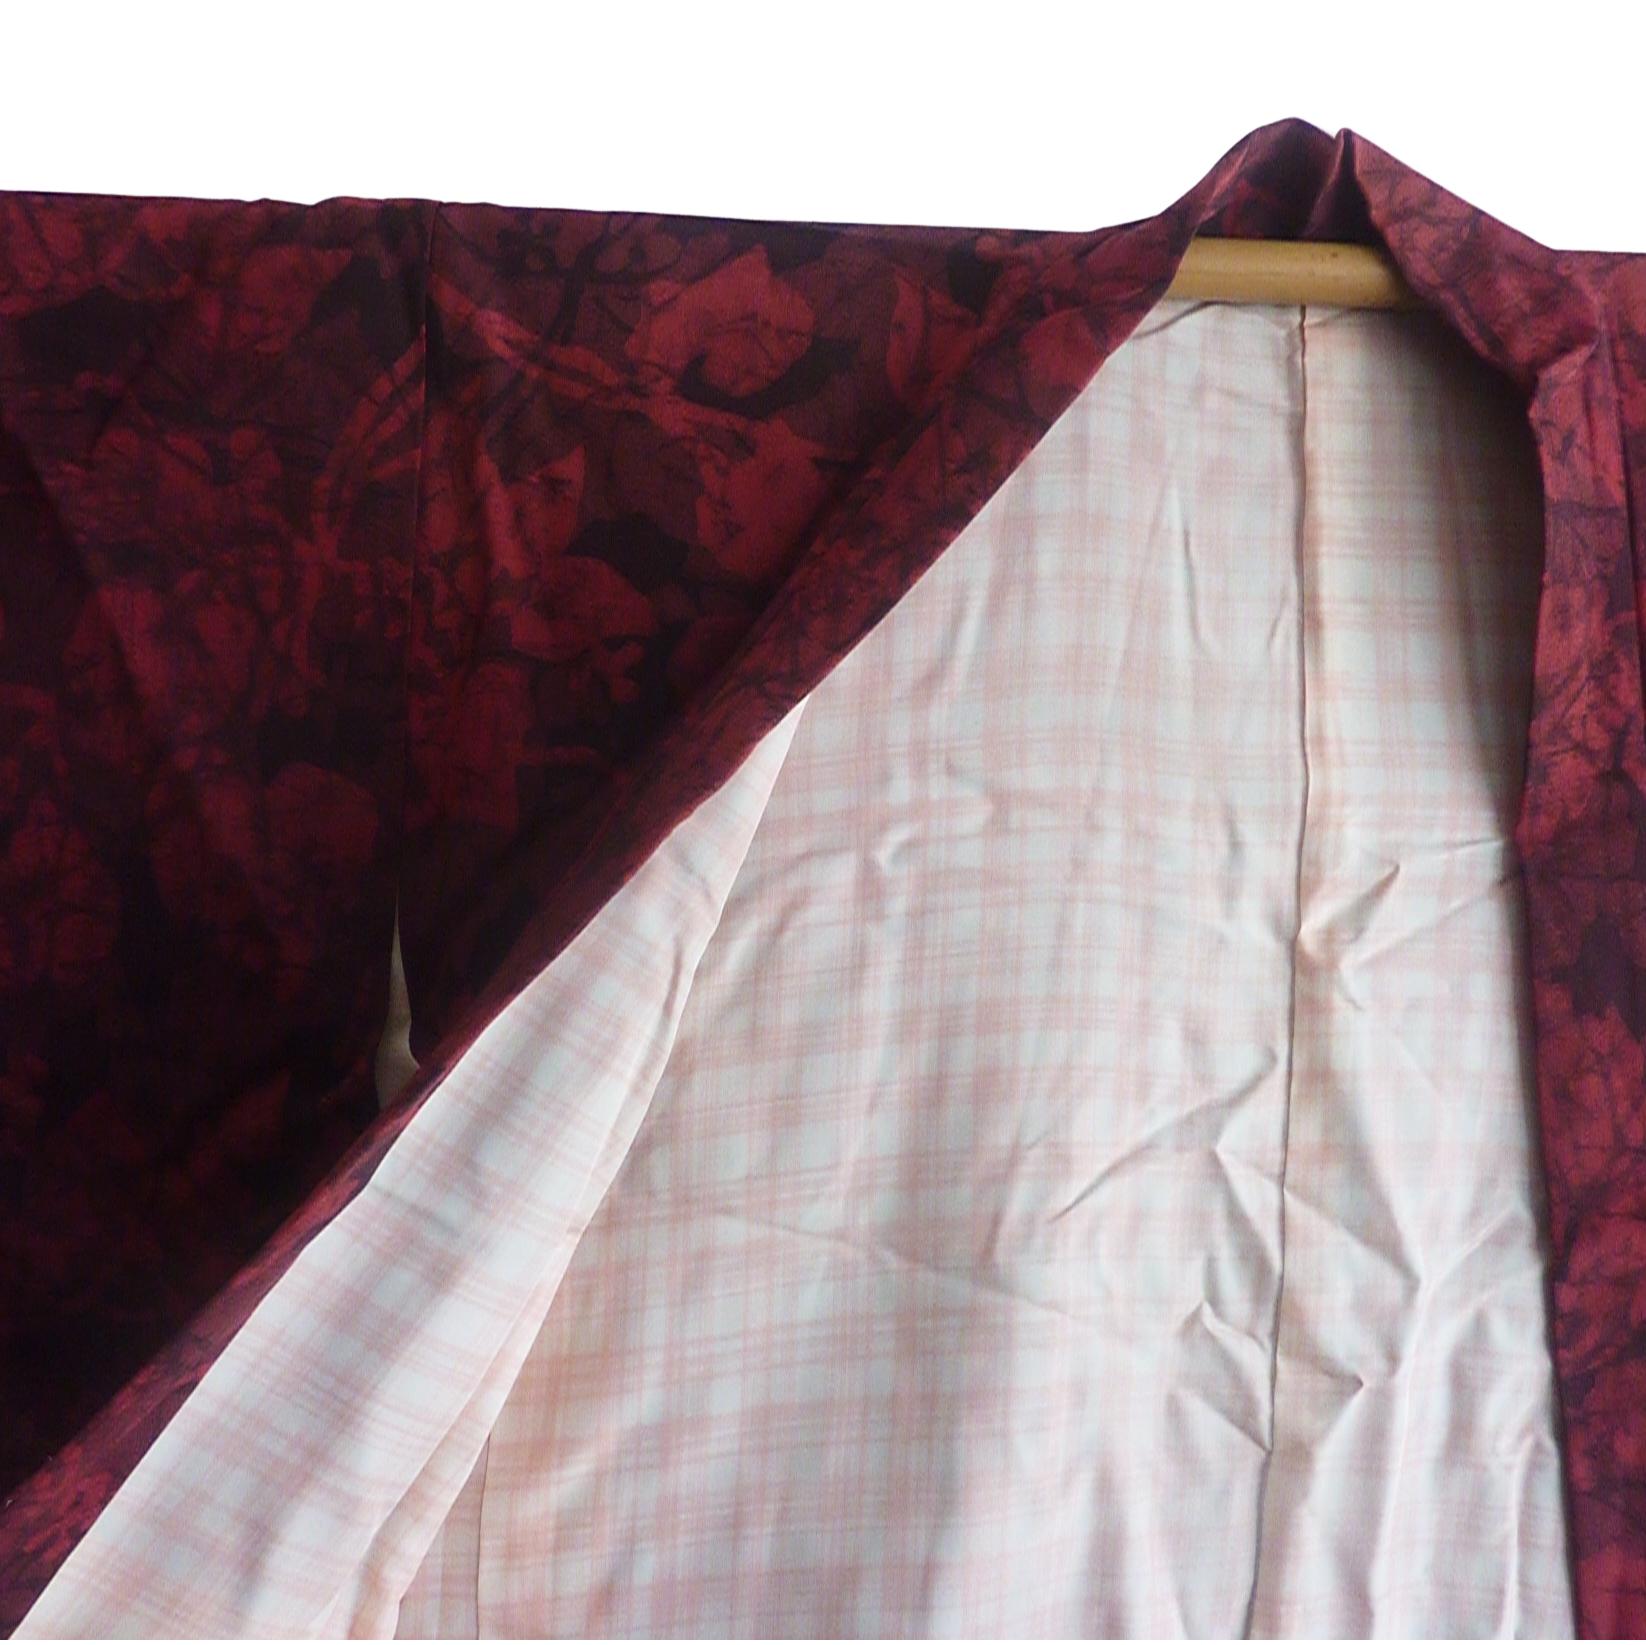 Antique Silk Haori kimono jacket  
Fabric: heavy silk crepe in red black foliage print
Peach plaid silk lining.
Circa: 1910
Place of Origin: Japan
Material: Silk
Condition: Very good
Total length 32